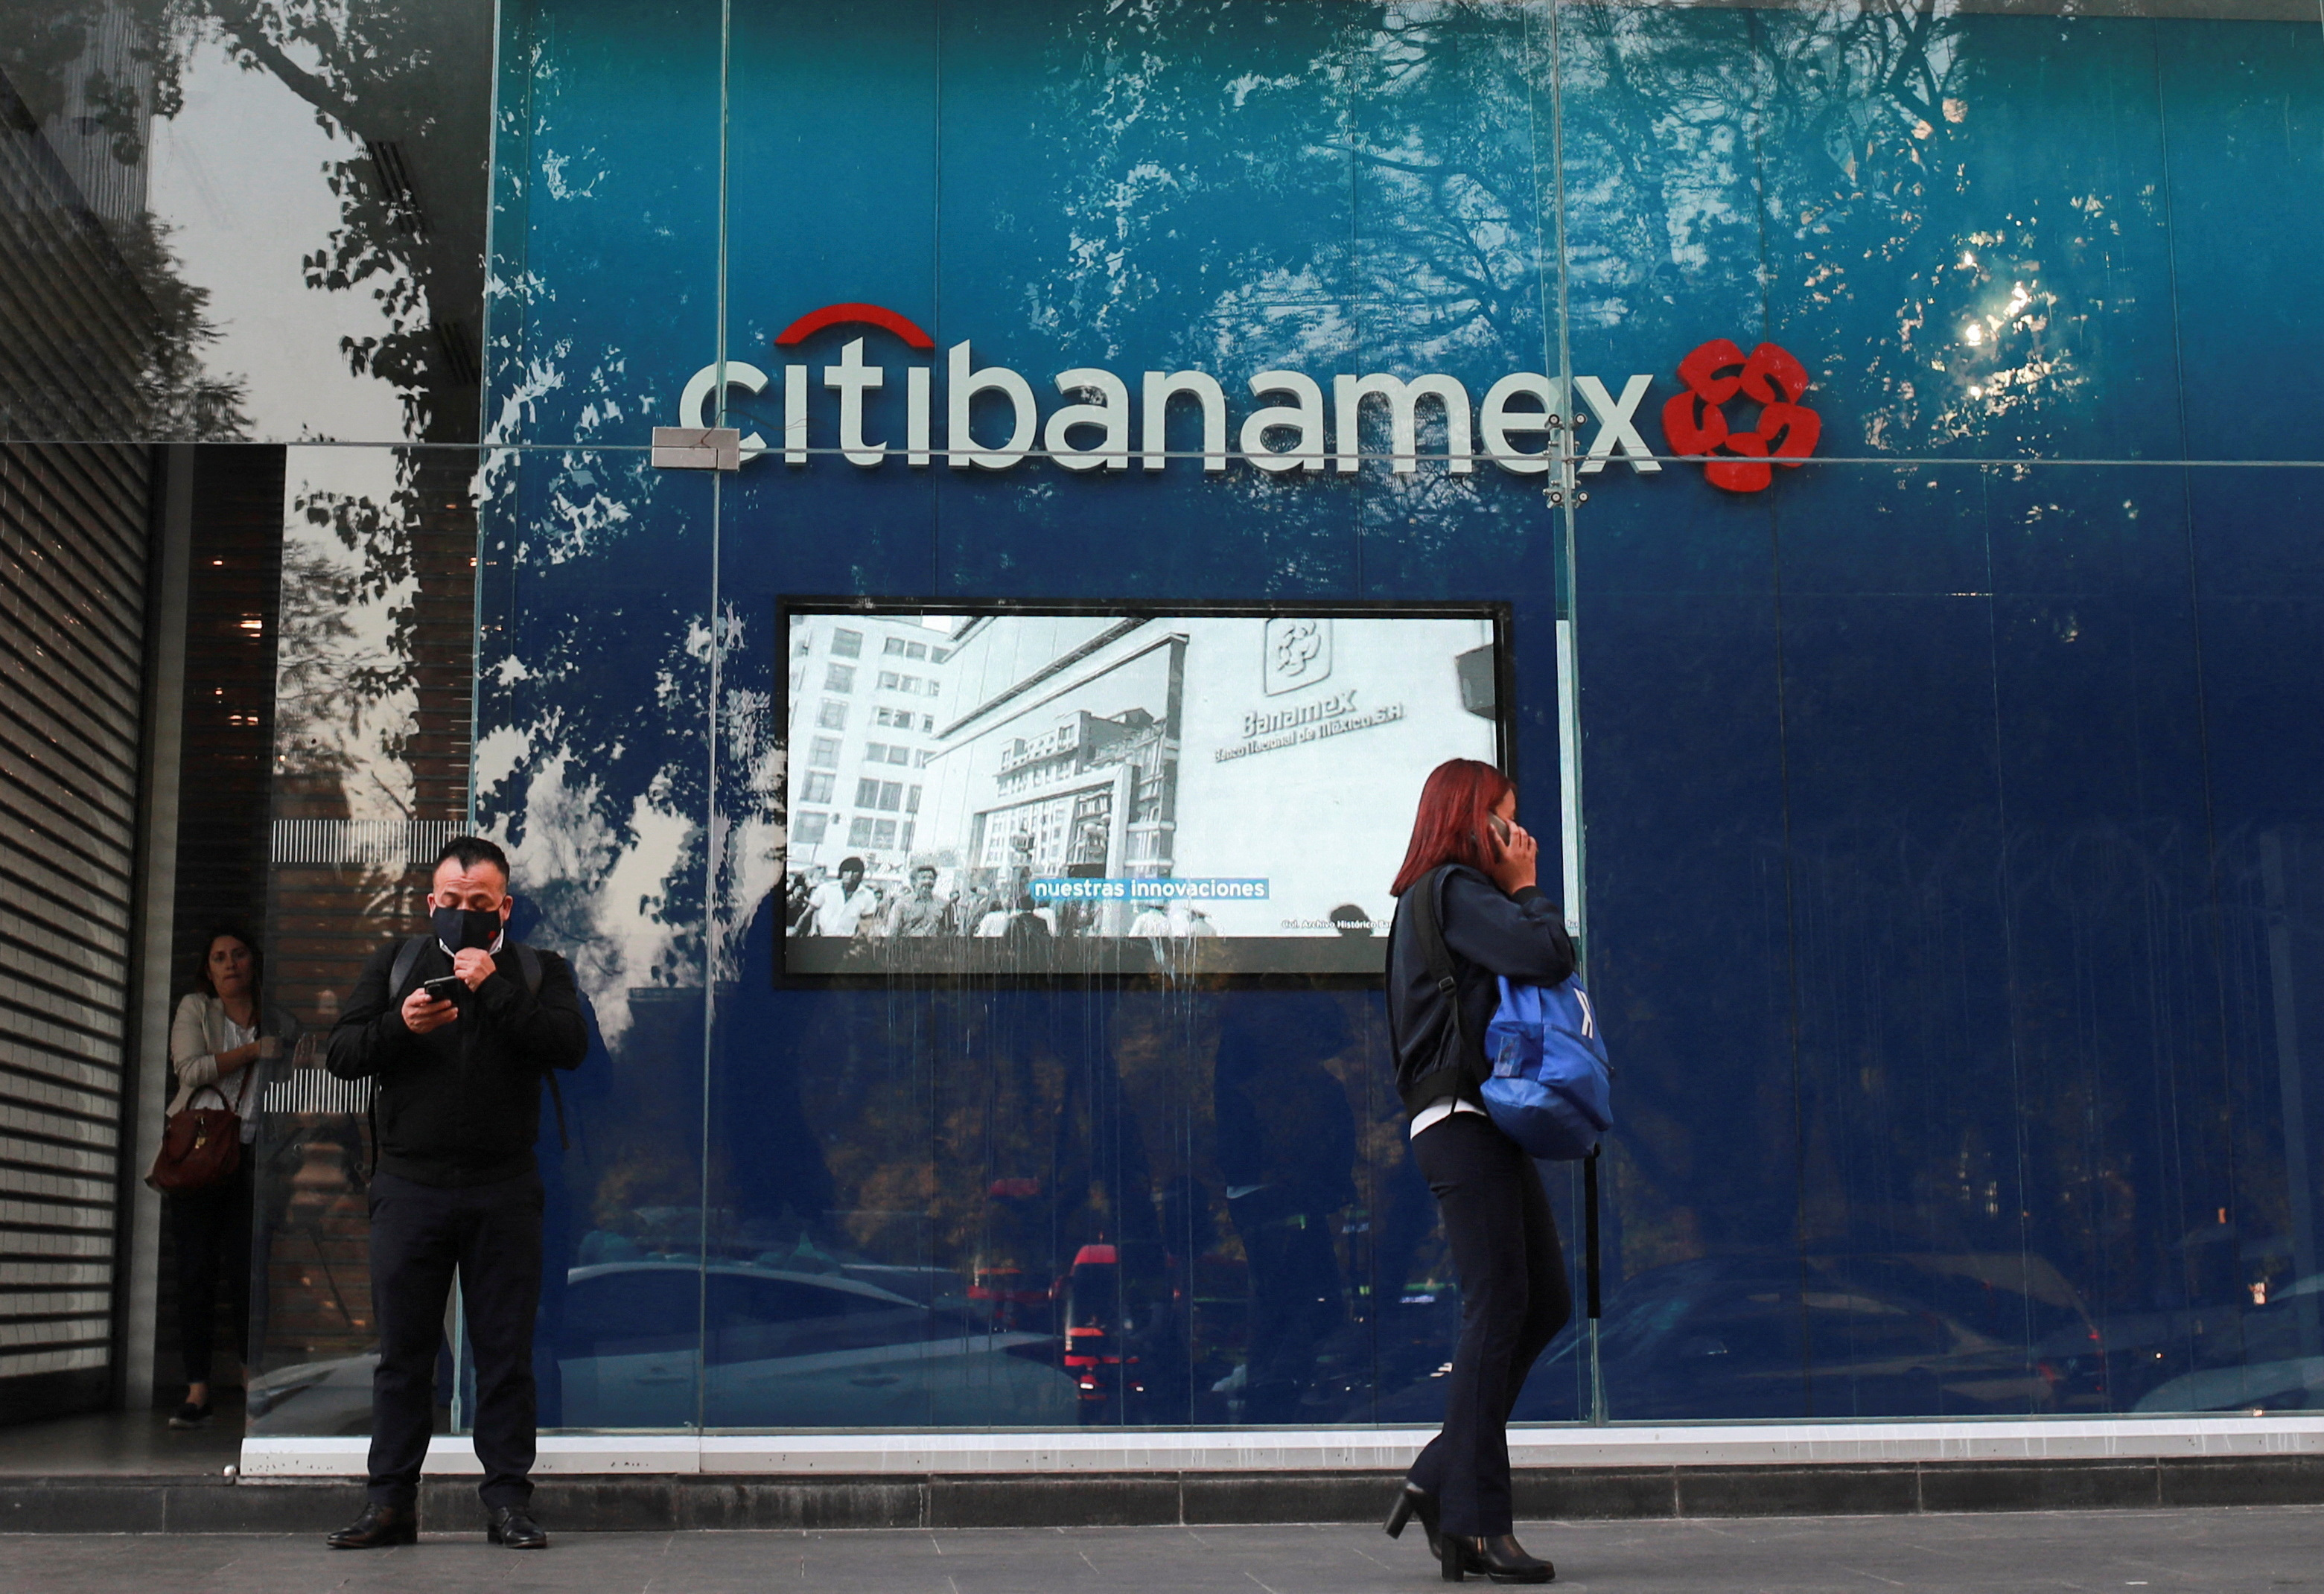 Citibanamex bank branch in Mexico City